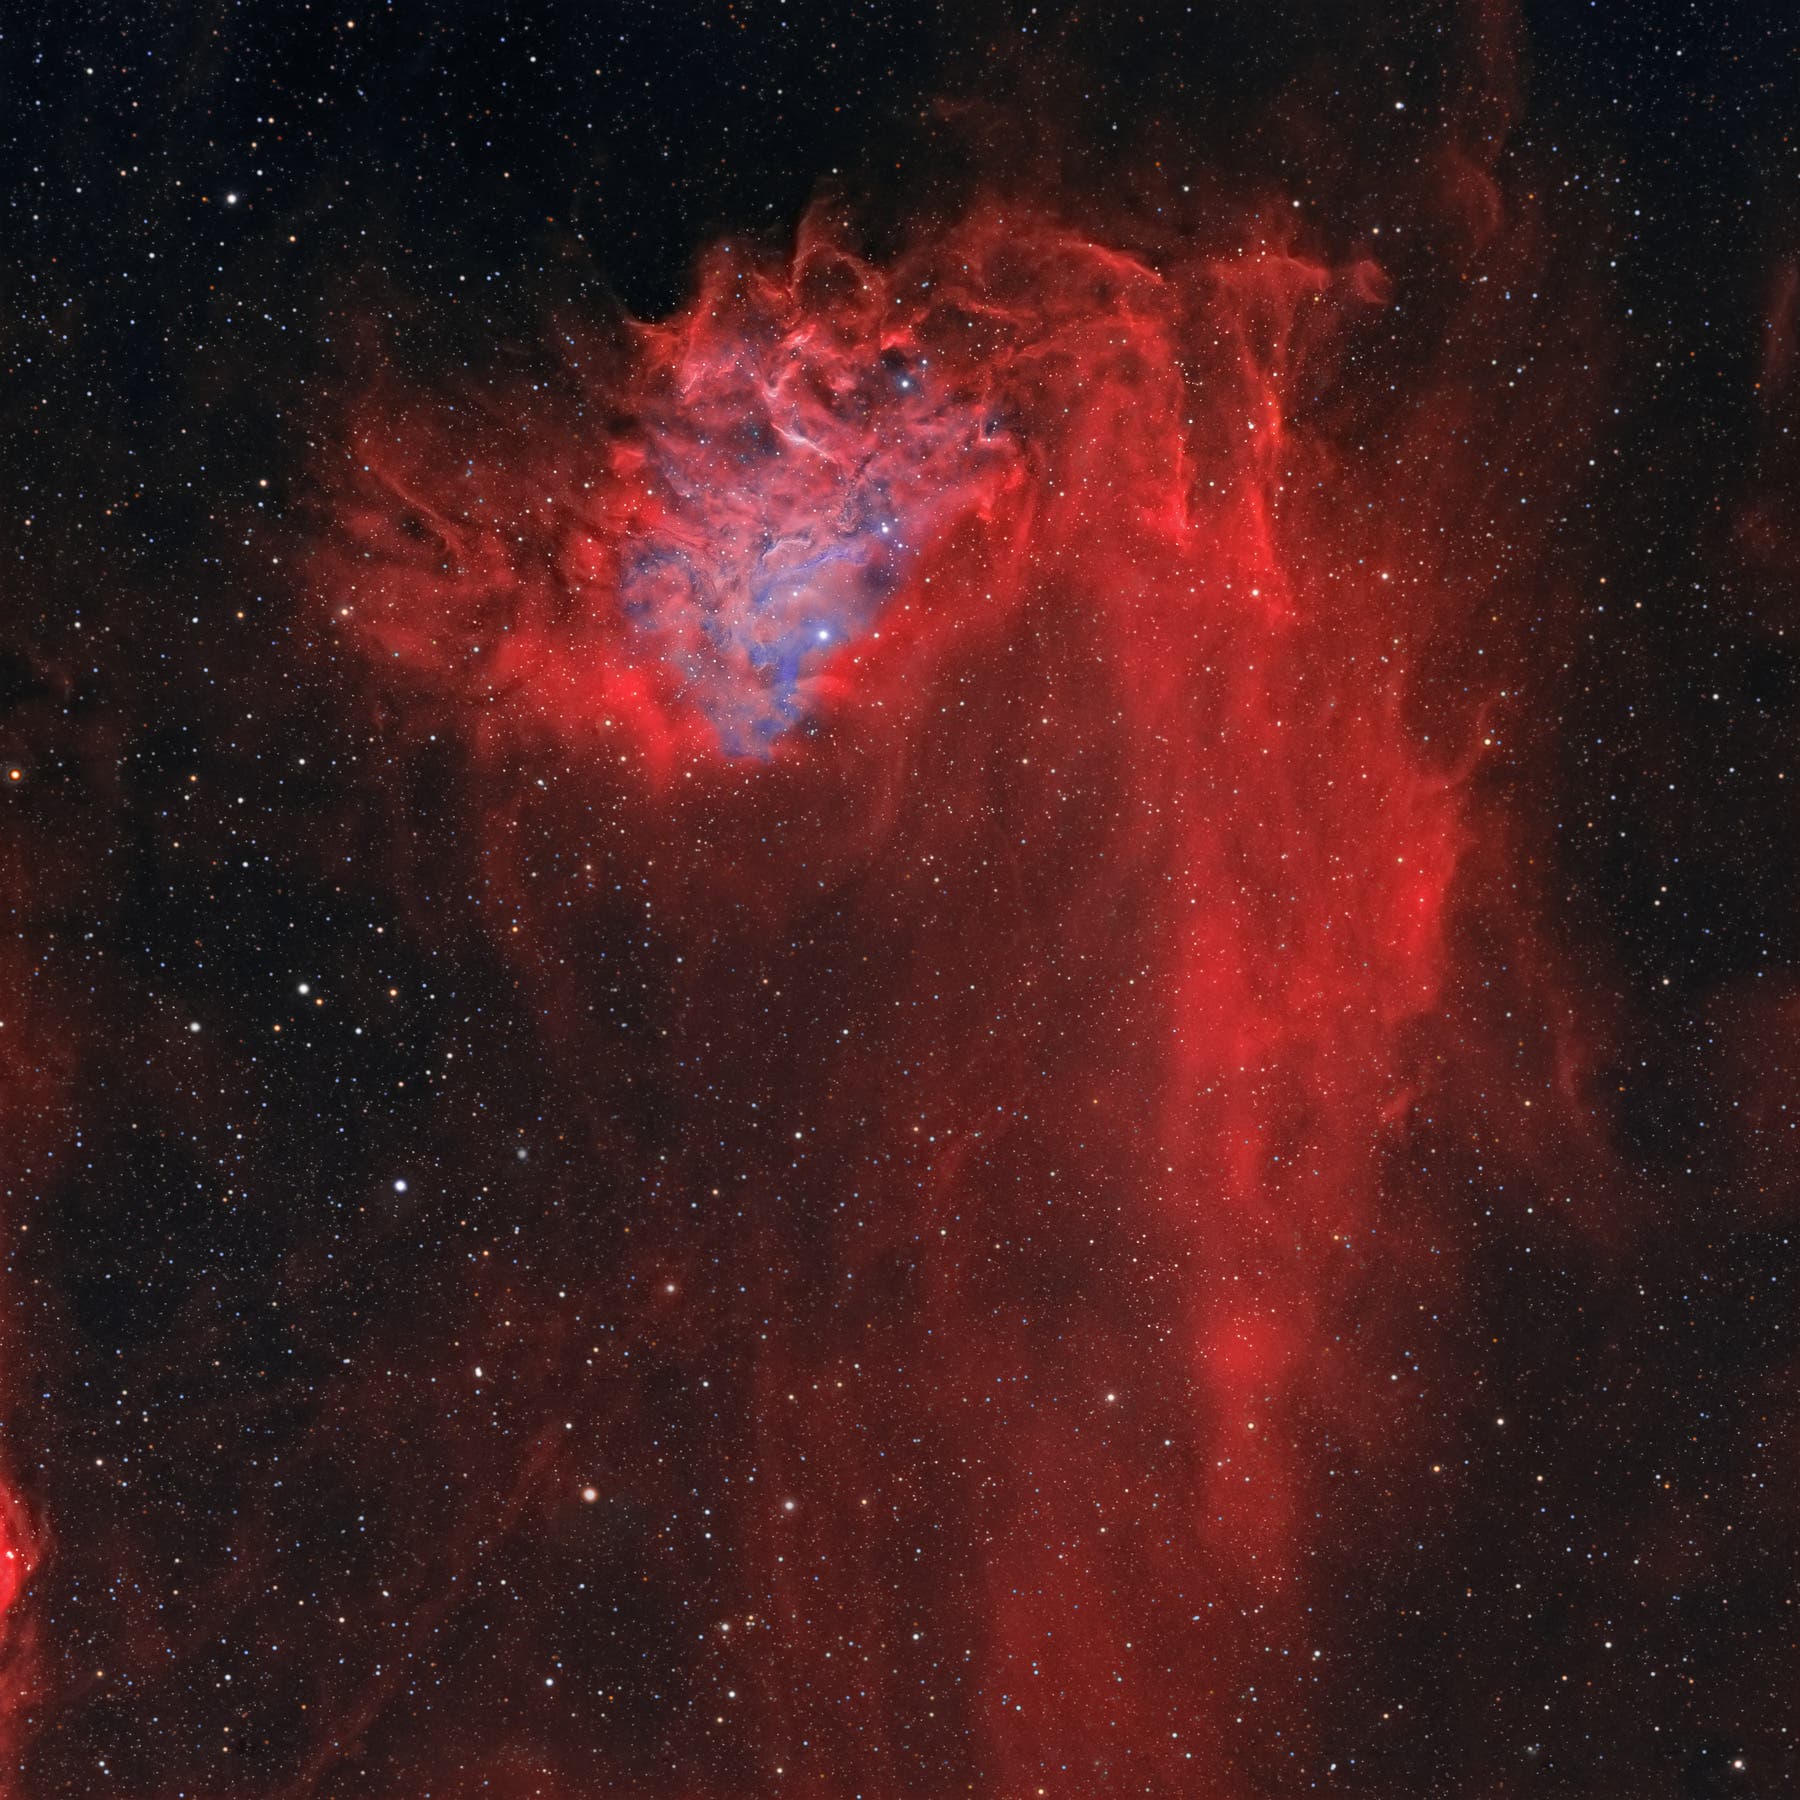 IC 405 - Flaming-Star-Nebel